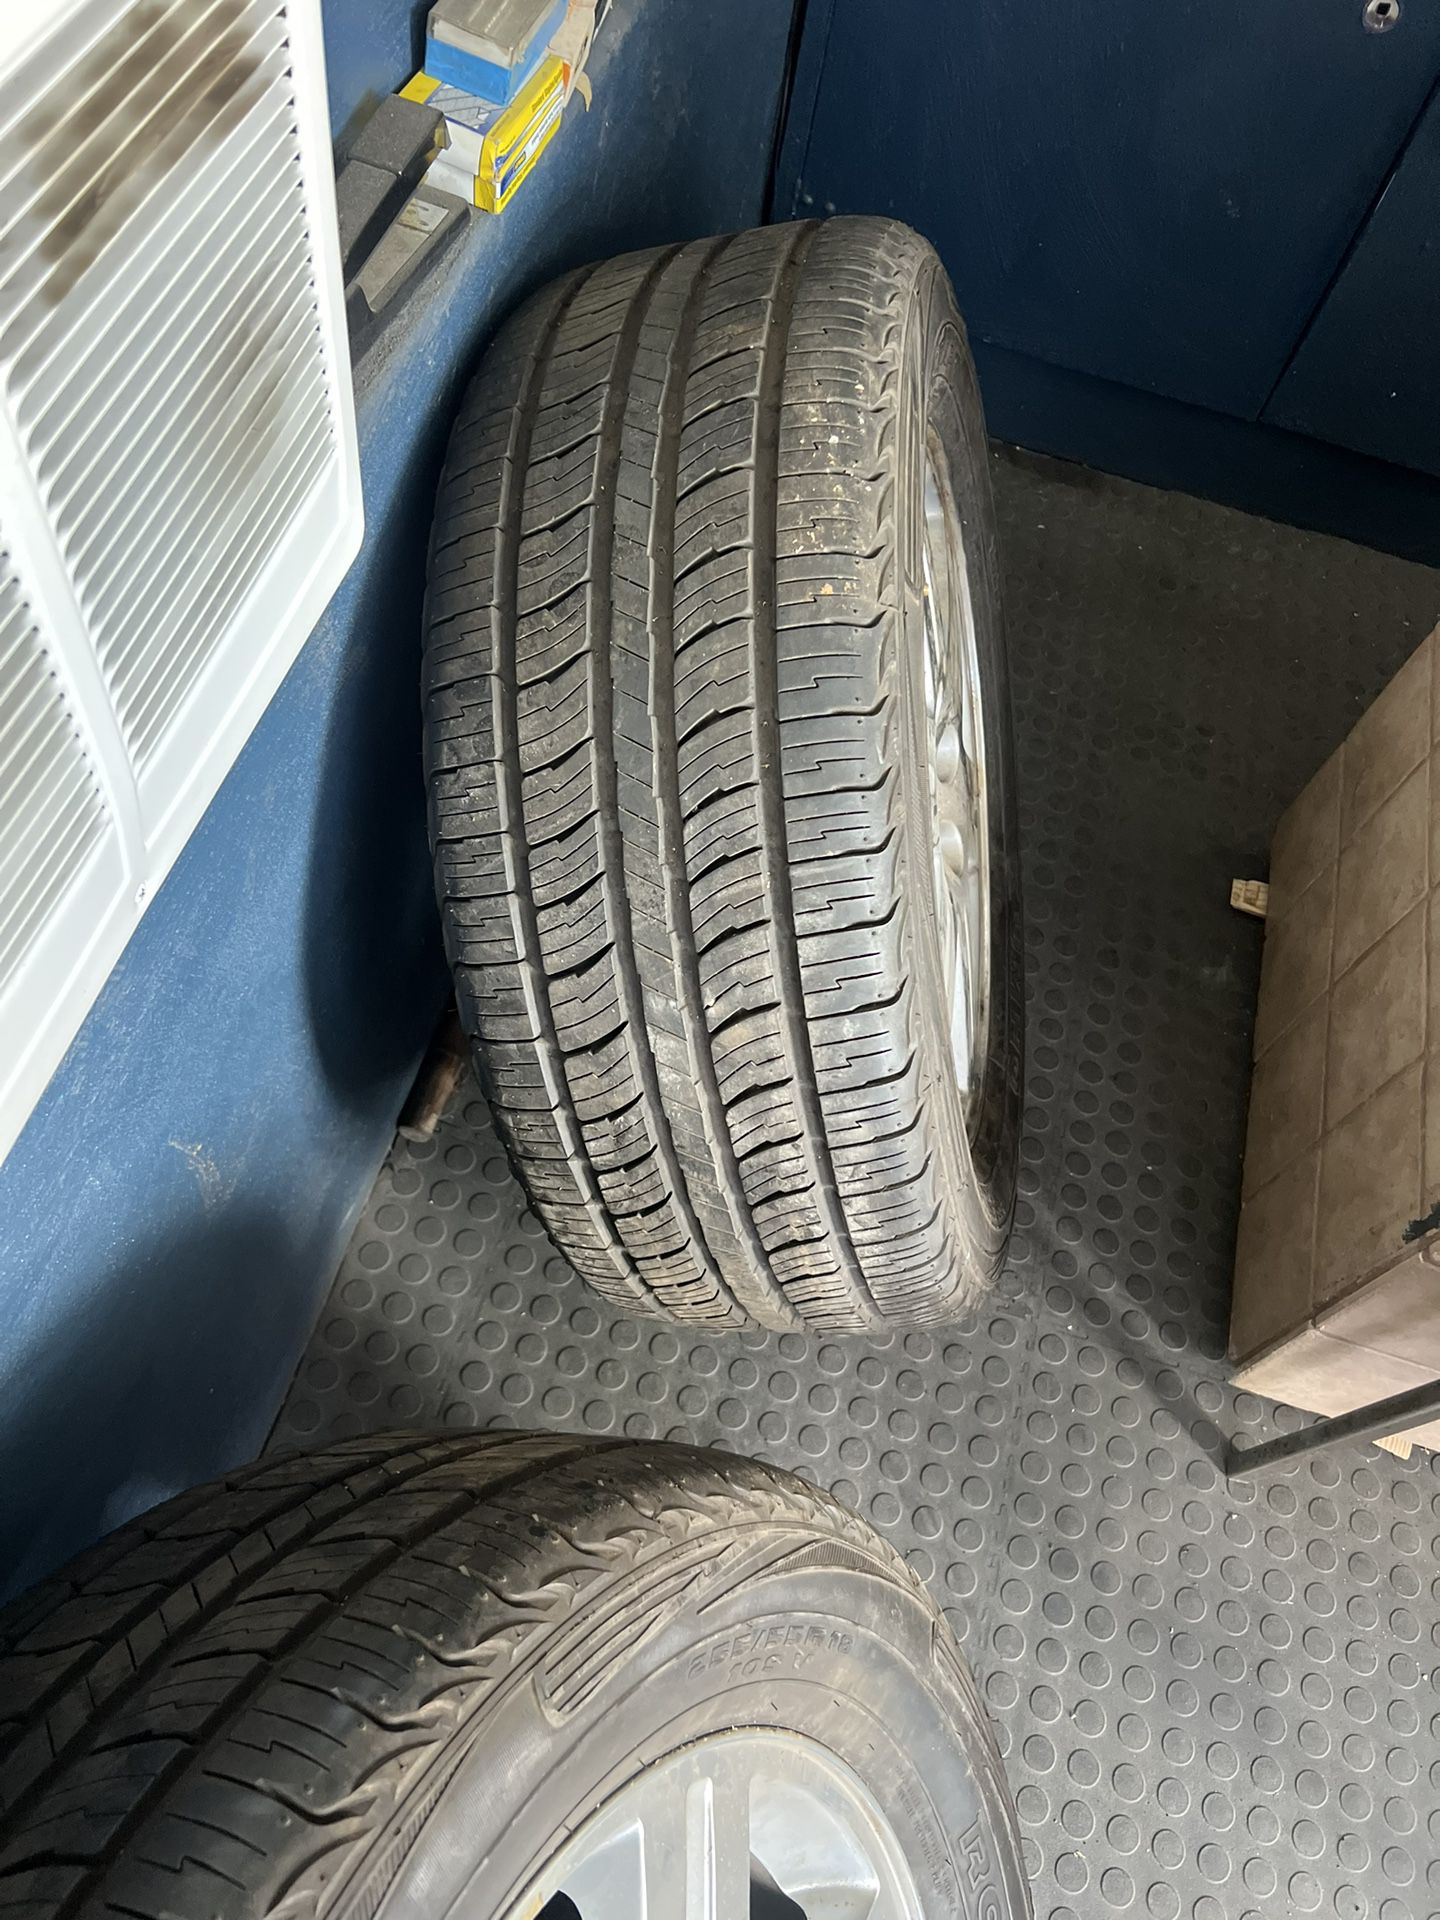 Chrysler Wheels And Tires 